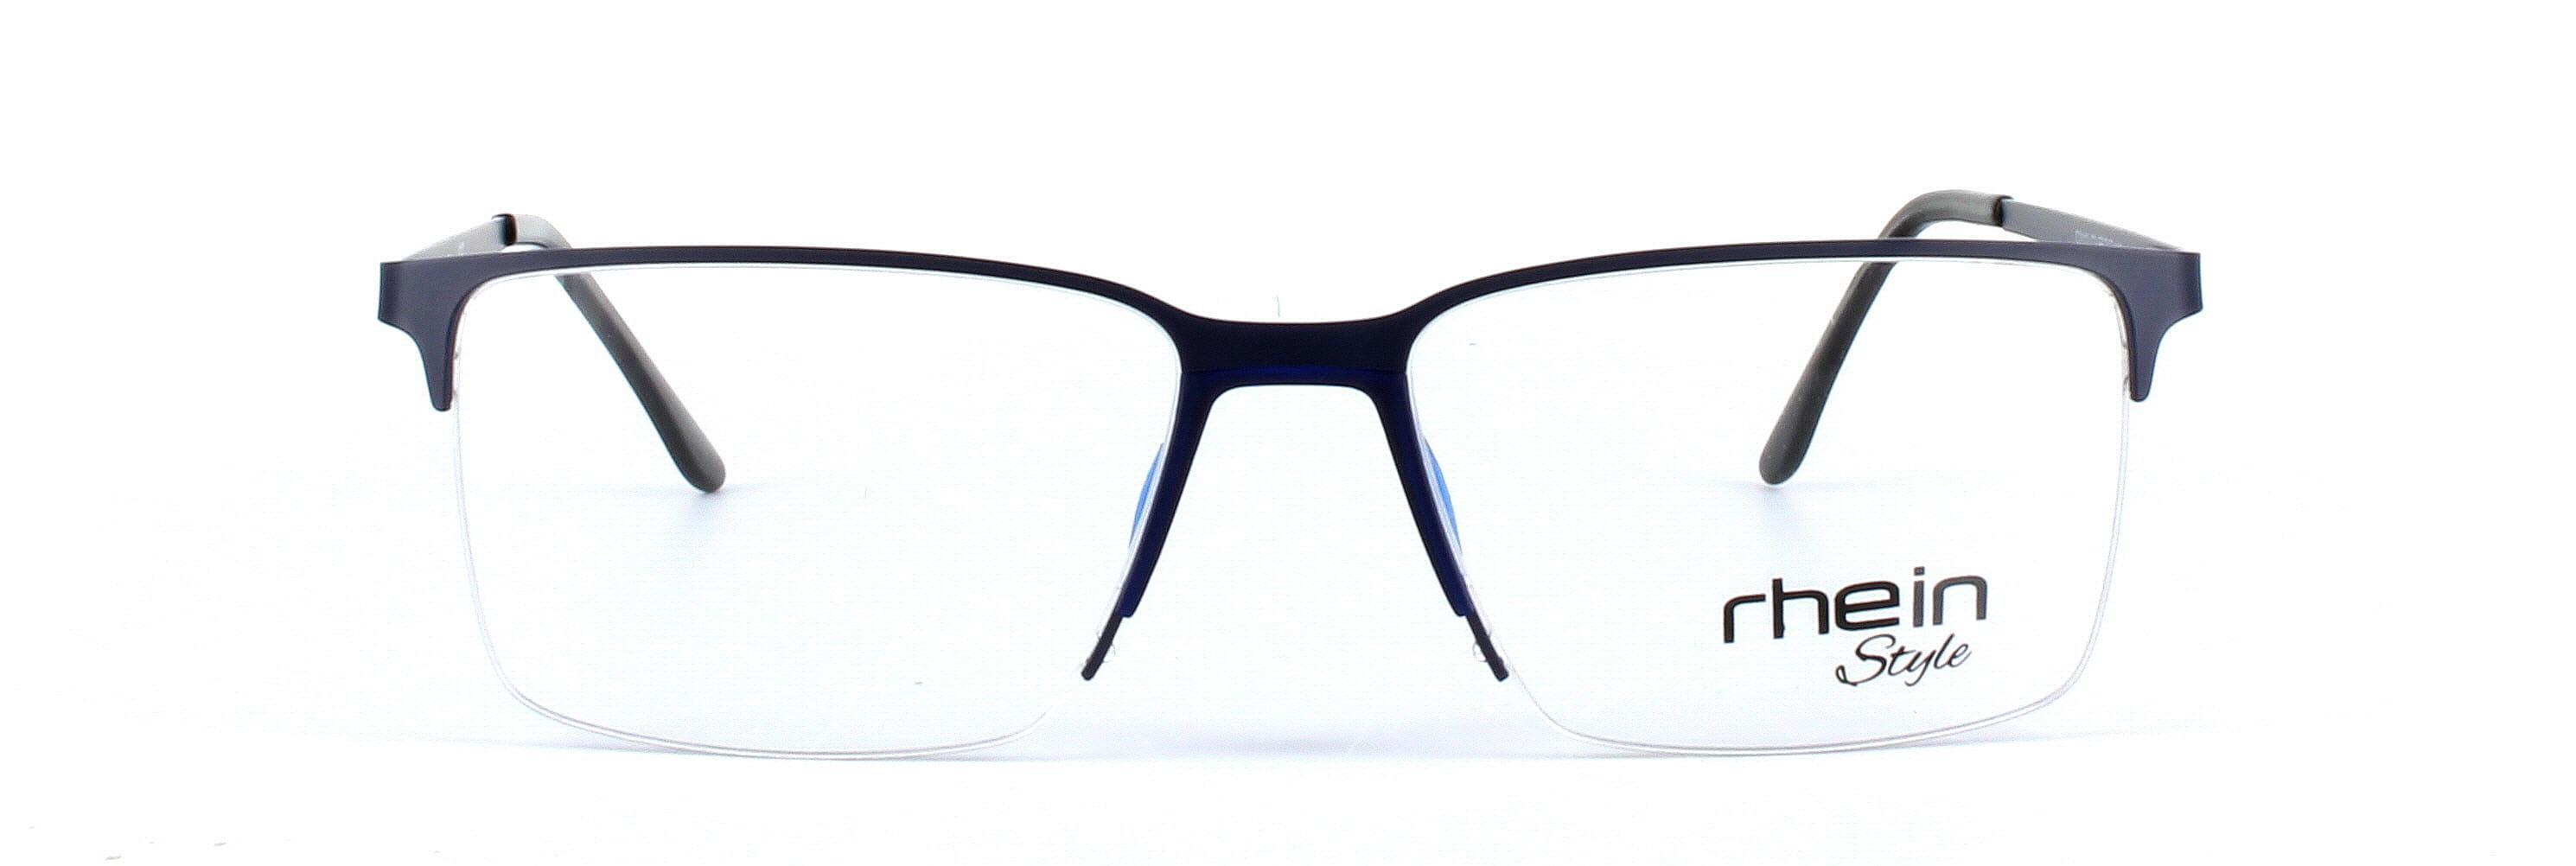 Hamilton Blue Semi Rimless Rectangular Metal Glasses - Image View 5